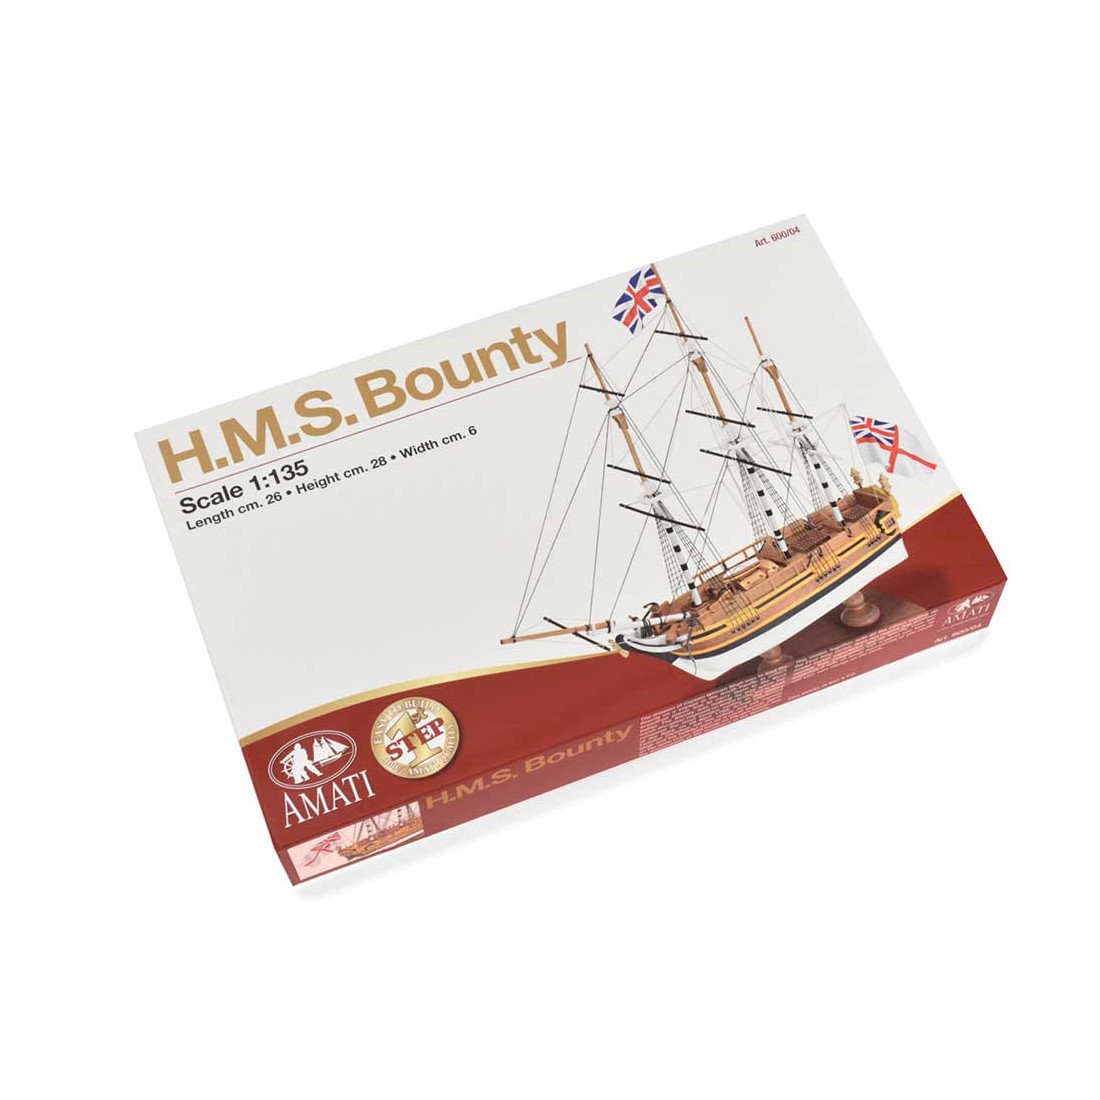 Scatola montaggio H.M.S. Bounty - First Step